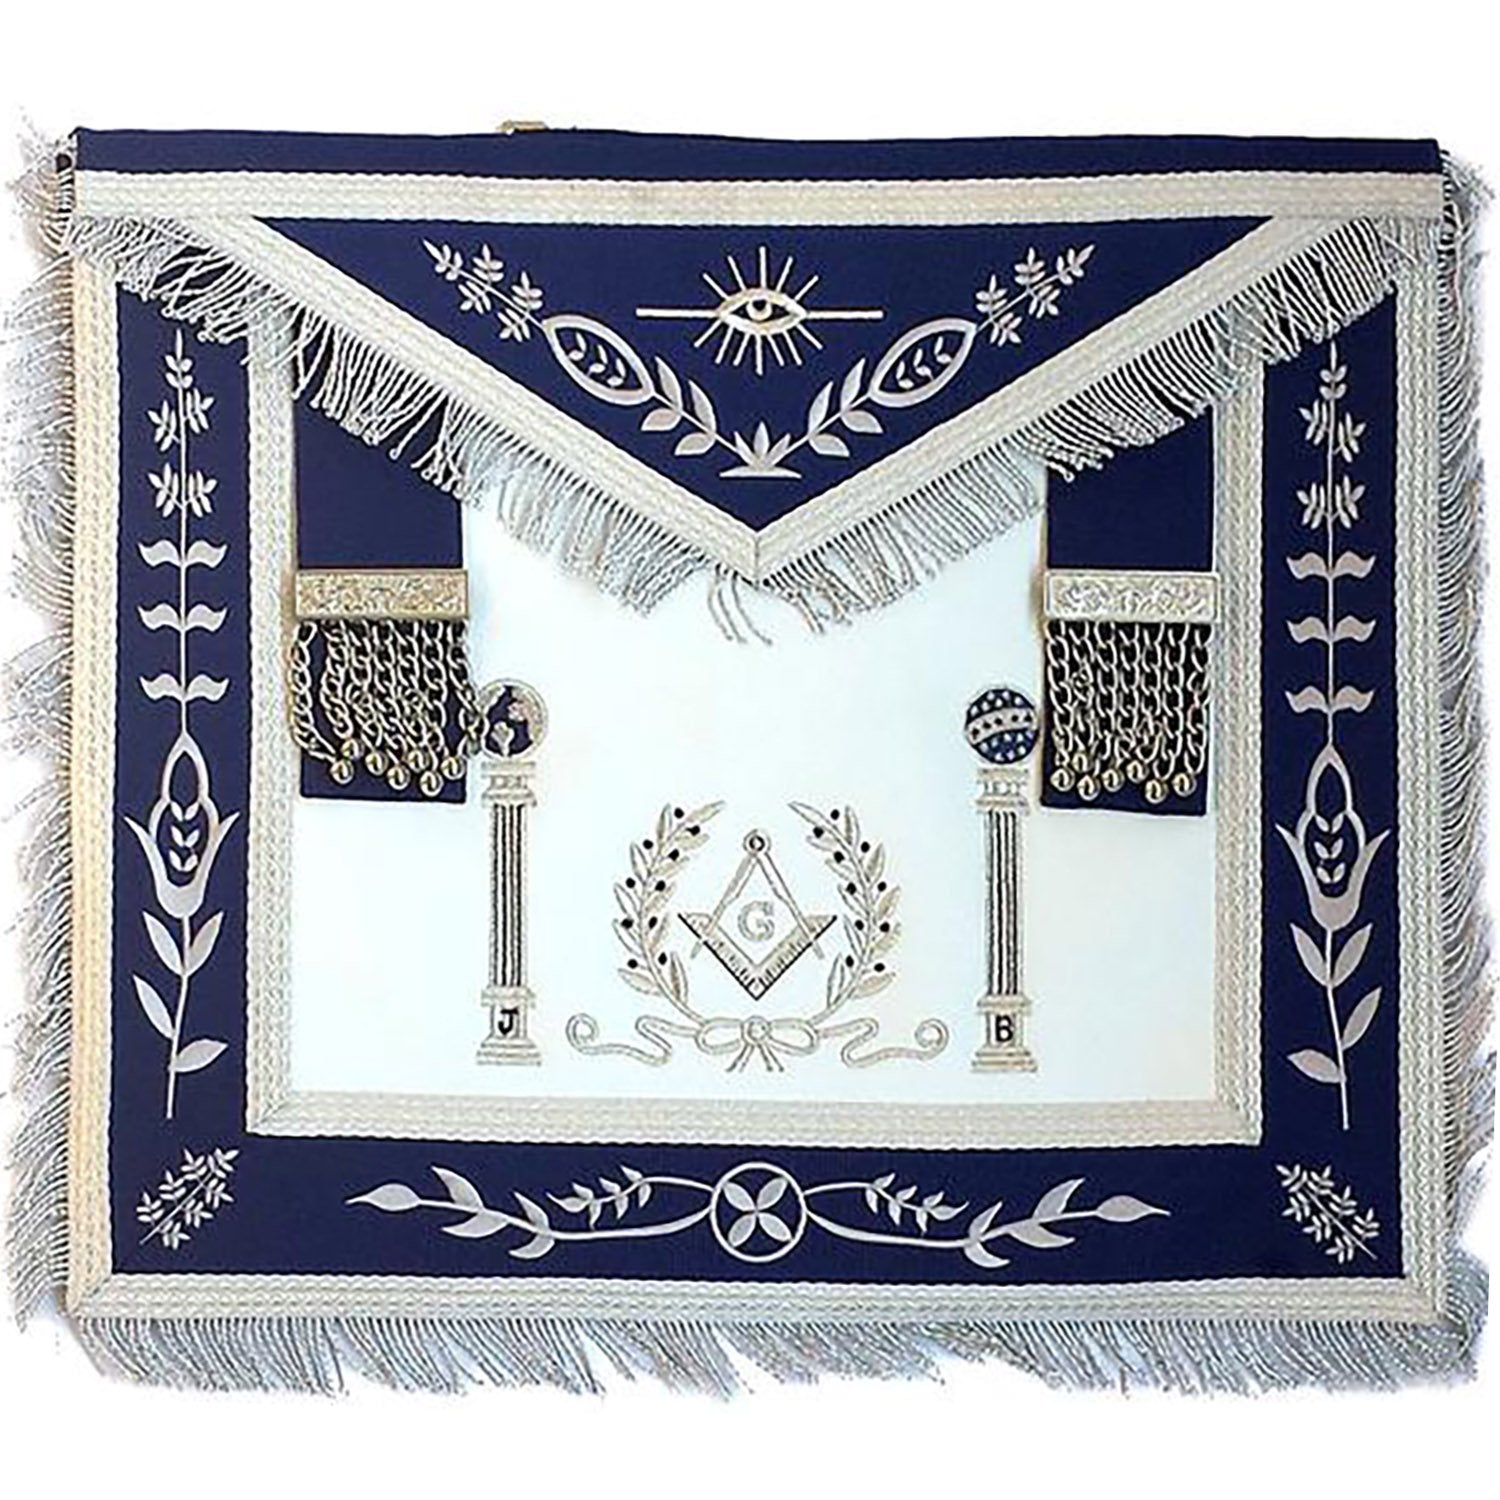 Master Mason Blue Lodge Apron - Navy Blue with Pillars Silver Hand Embroidery - Bricks Masons